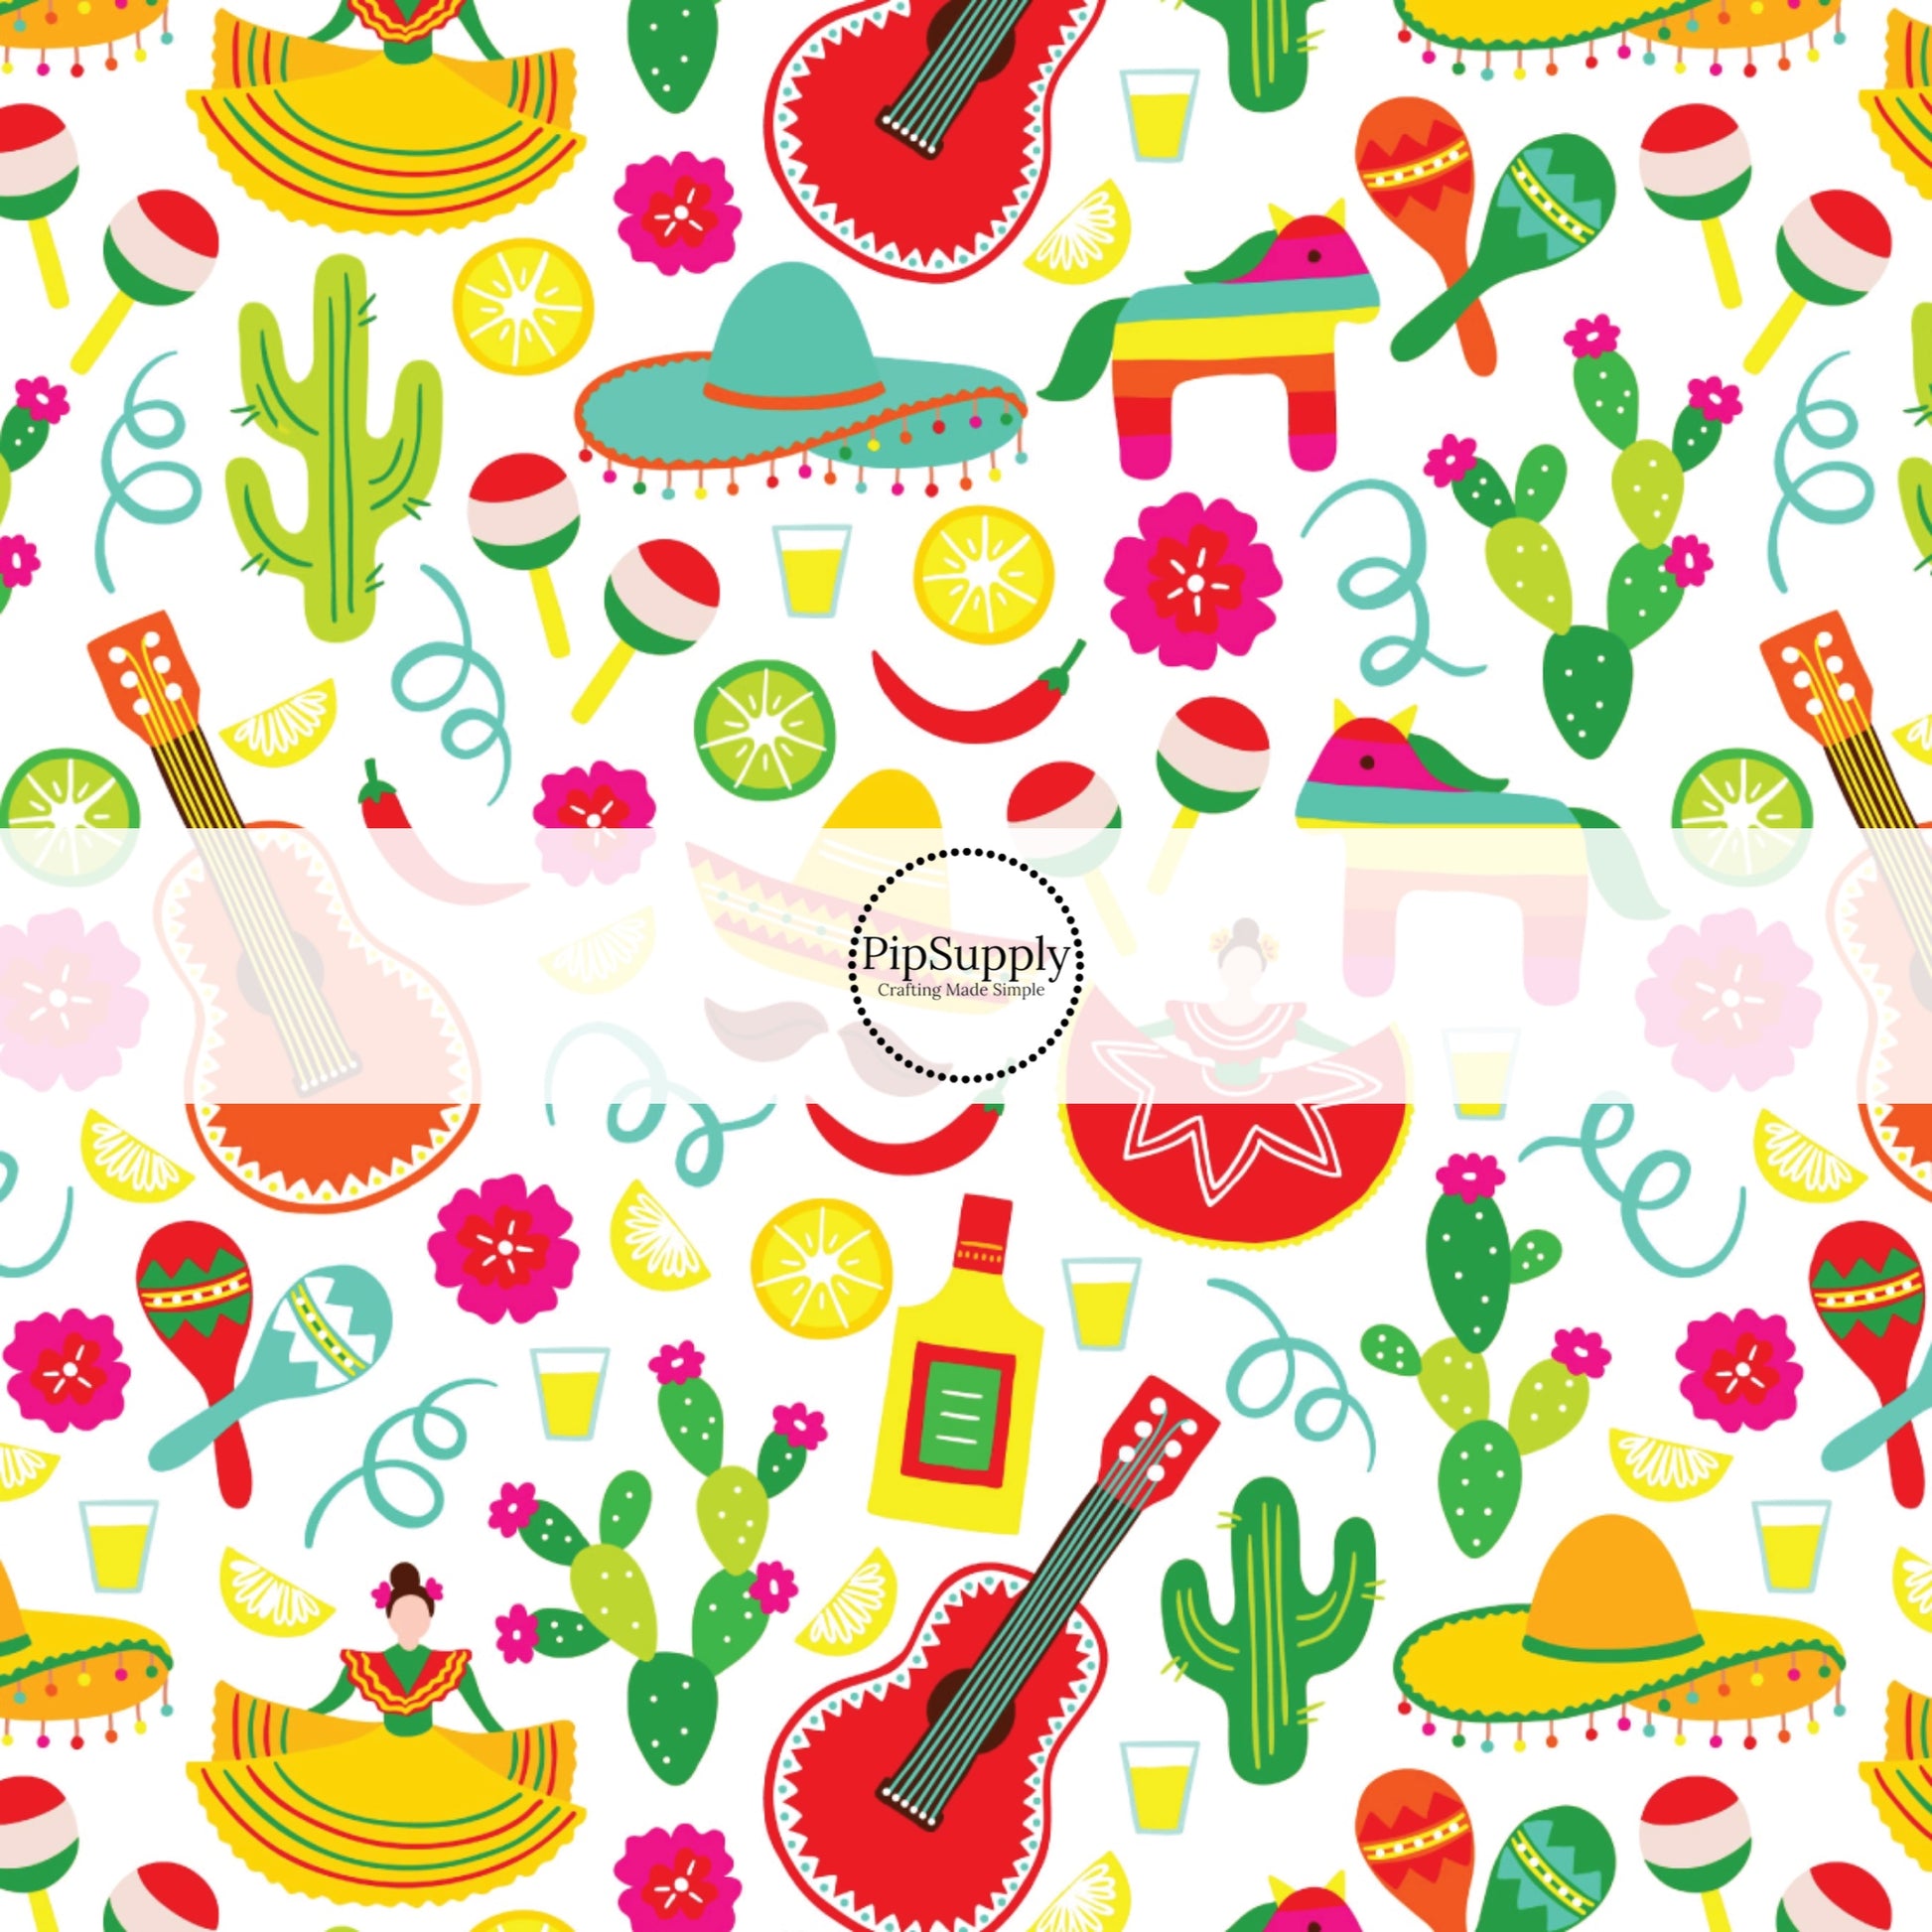 Cinco De Mayo fabric by the yard with guitars, cactus plants, maracas, and piñatas. 